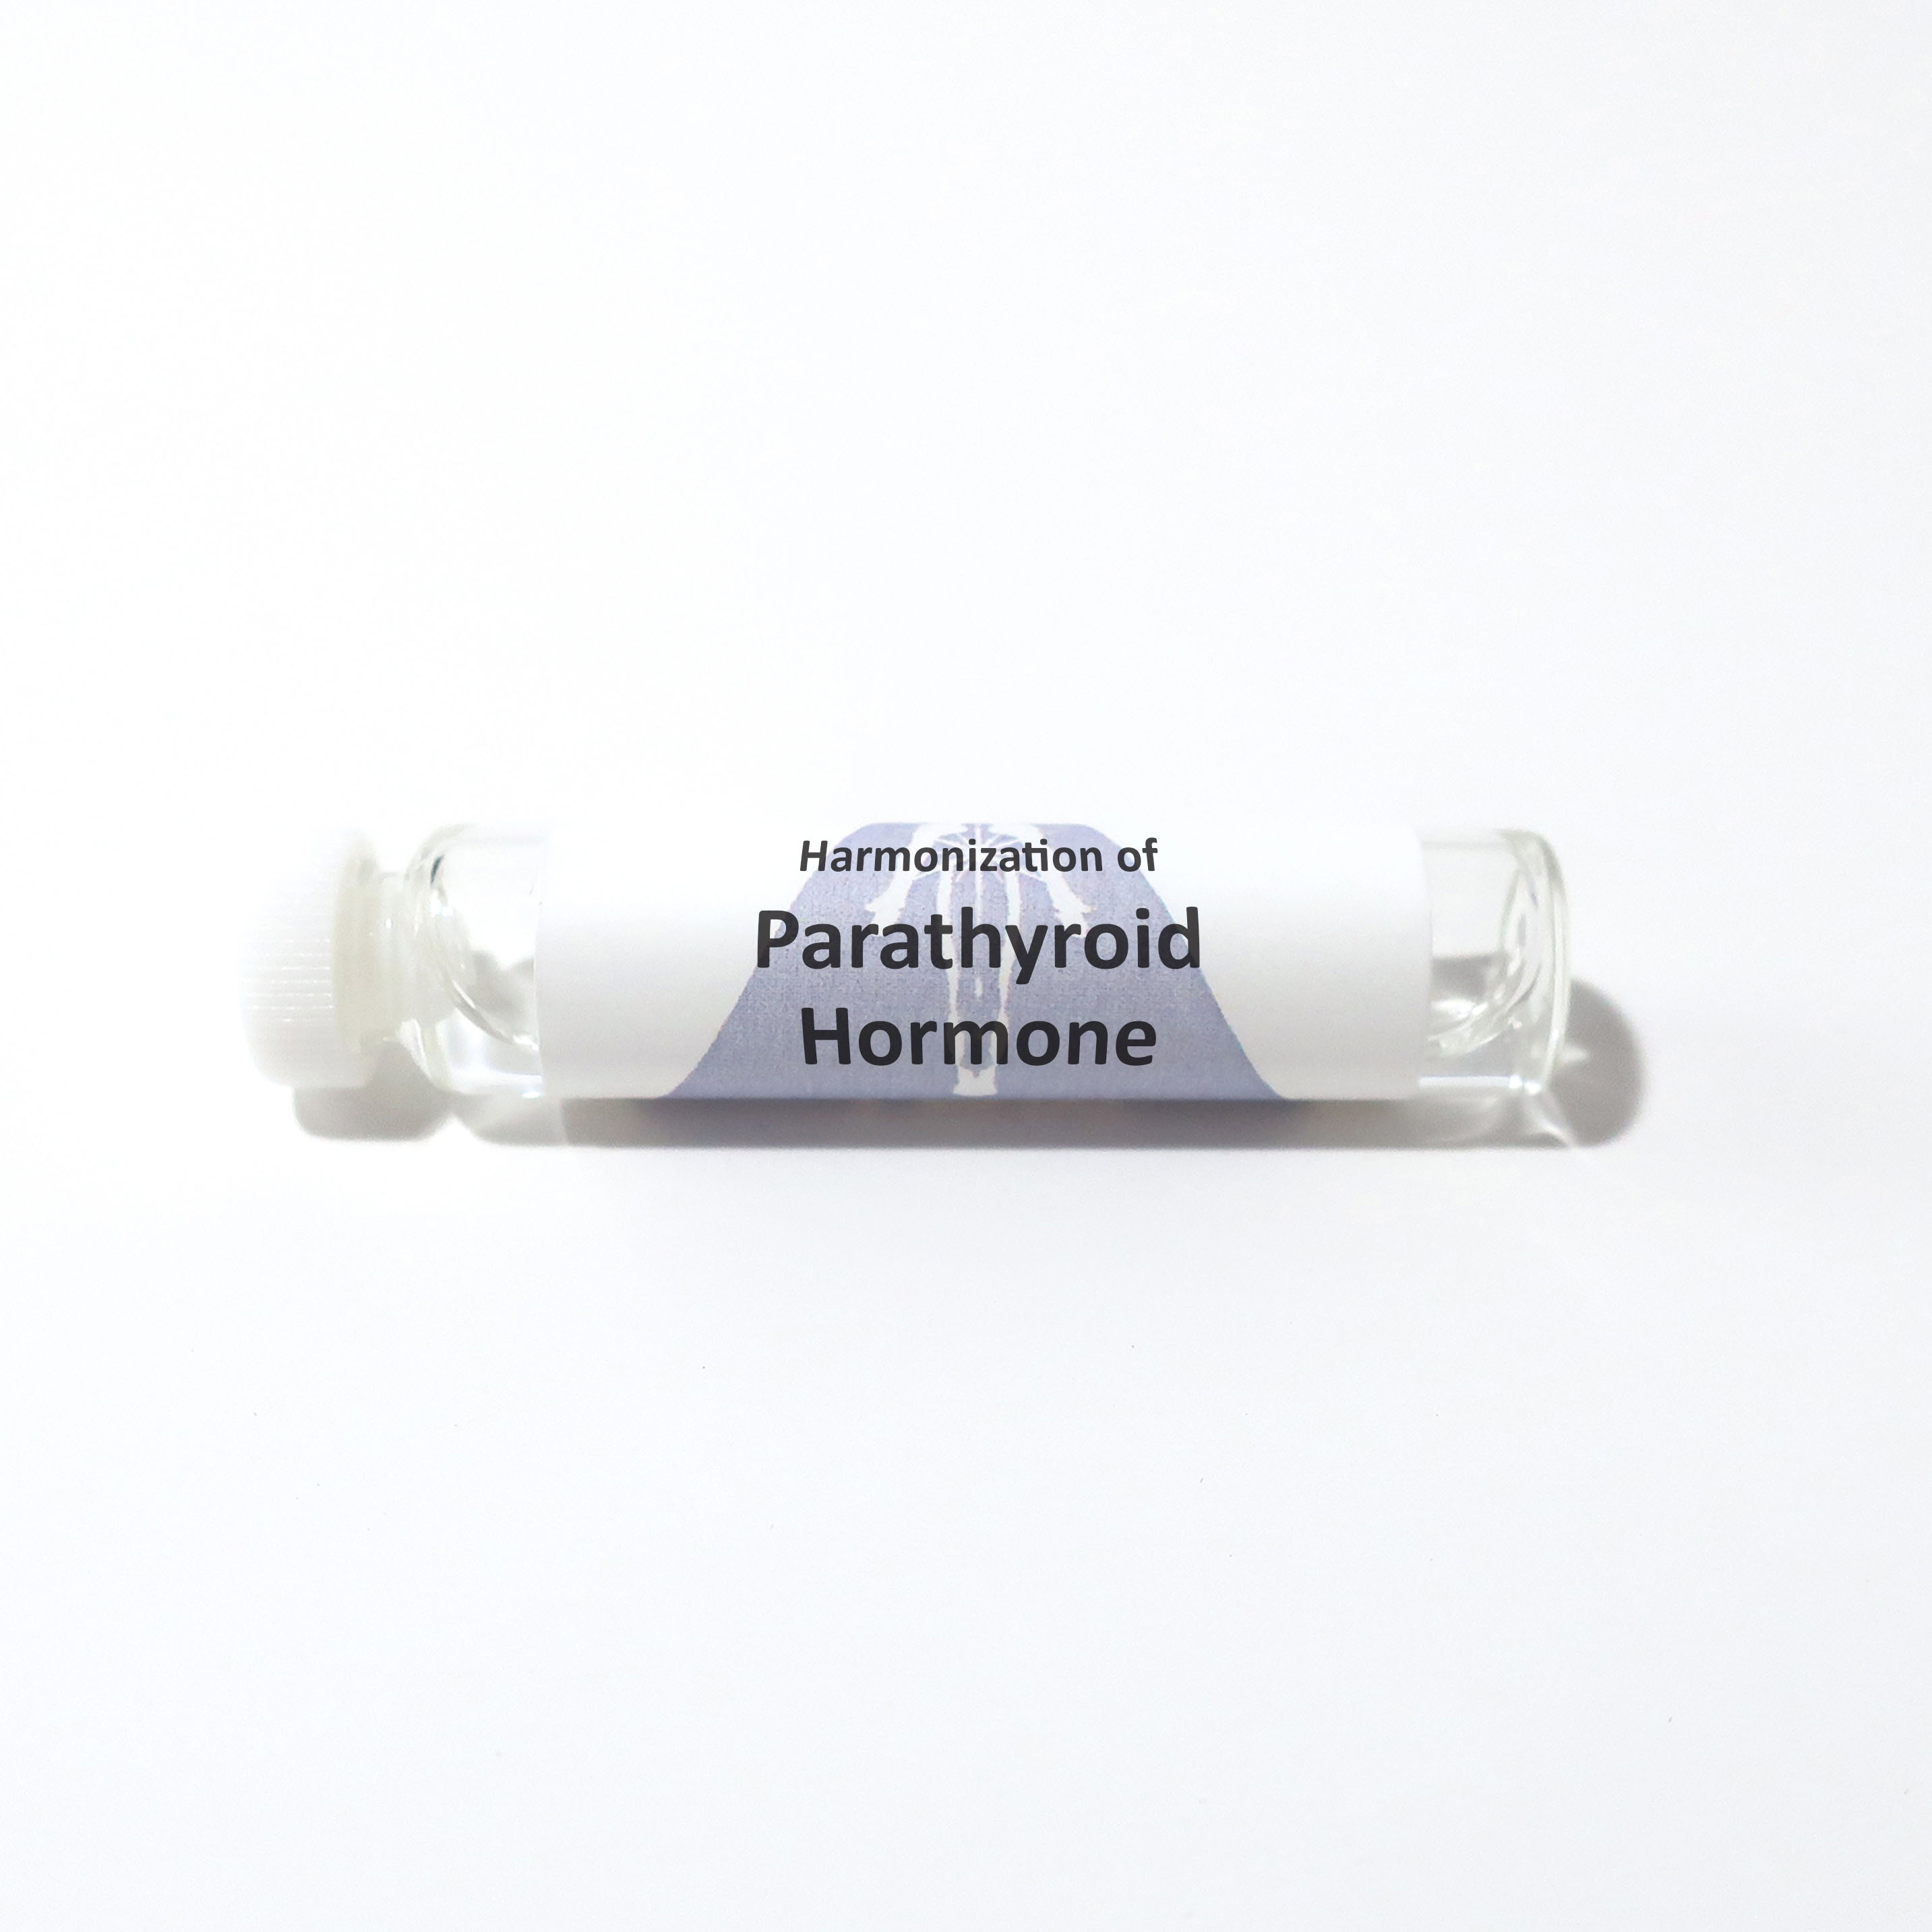 Parathyroid Hormone